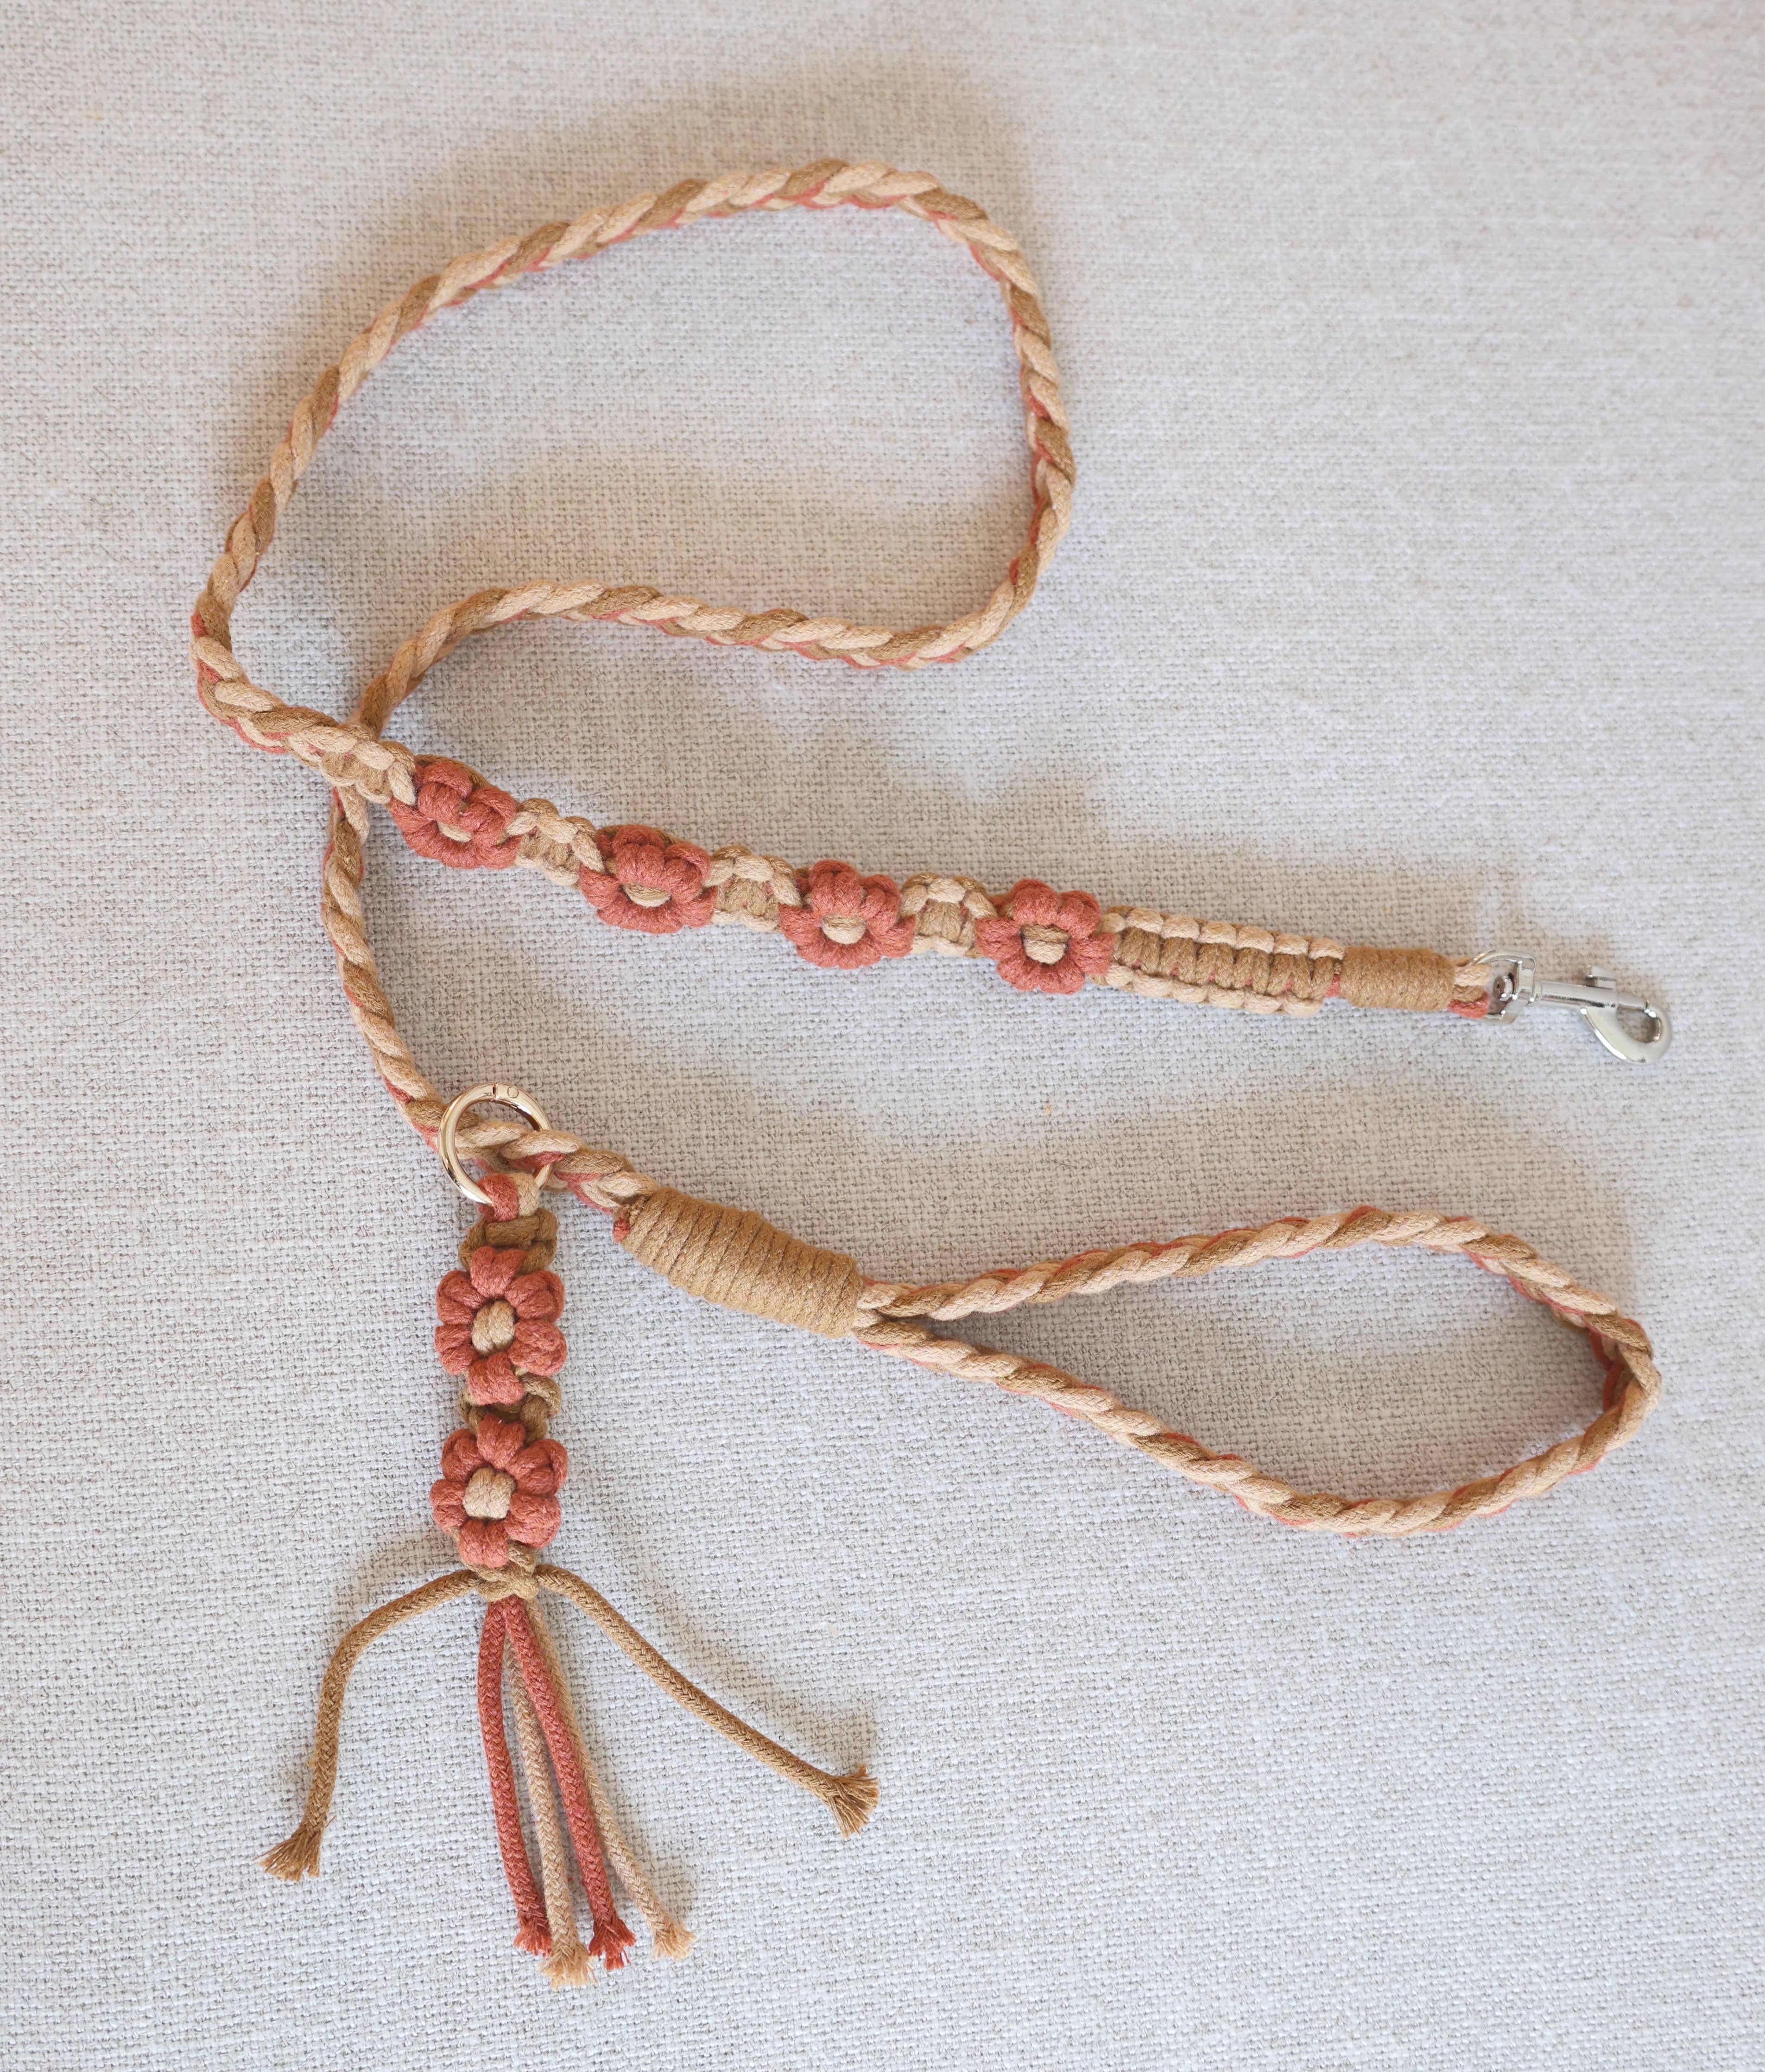 CSCORD International LLC - Handmade Macrame String Daisy Flower Dog Leash